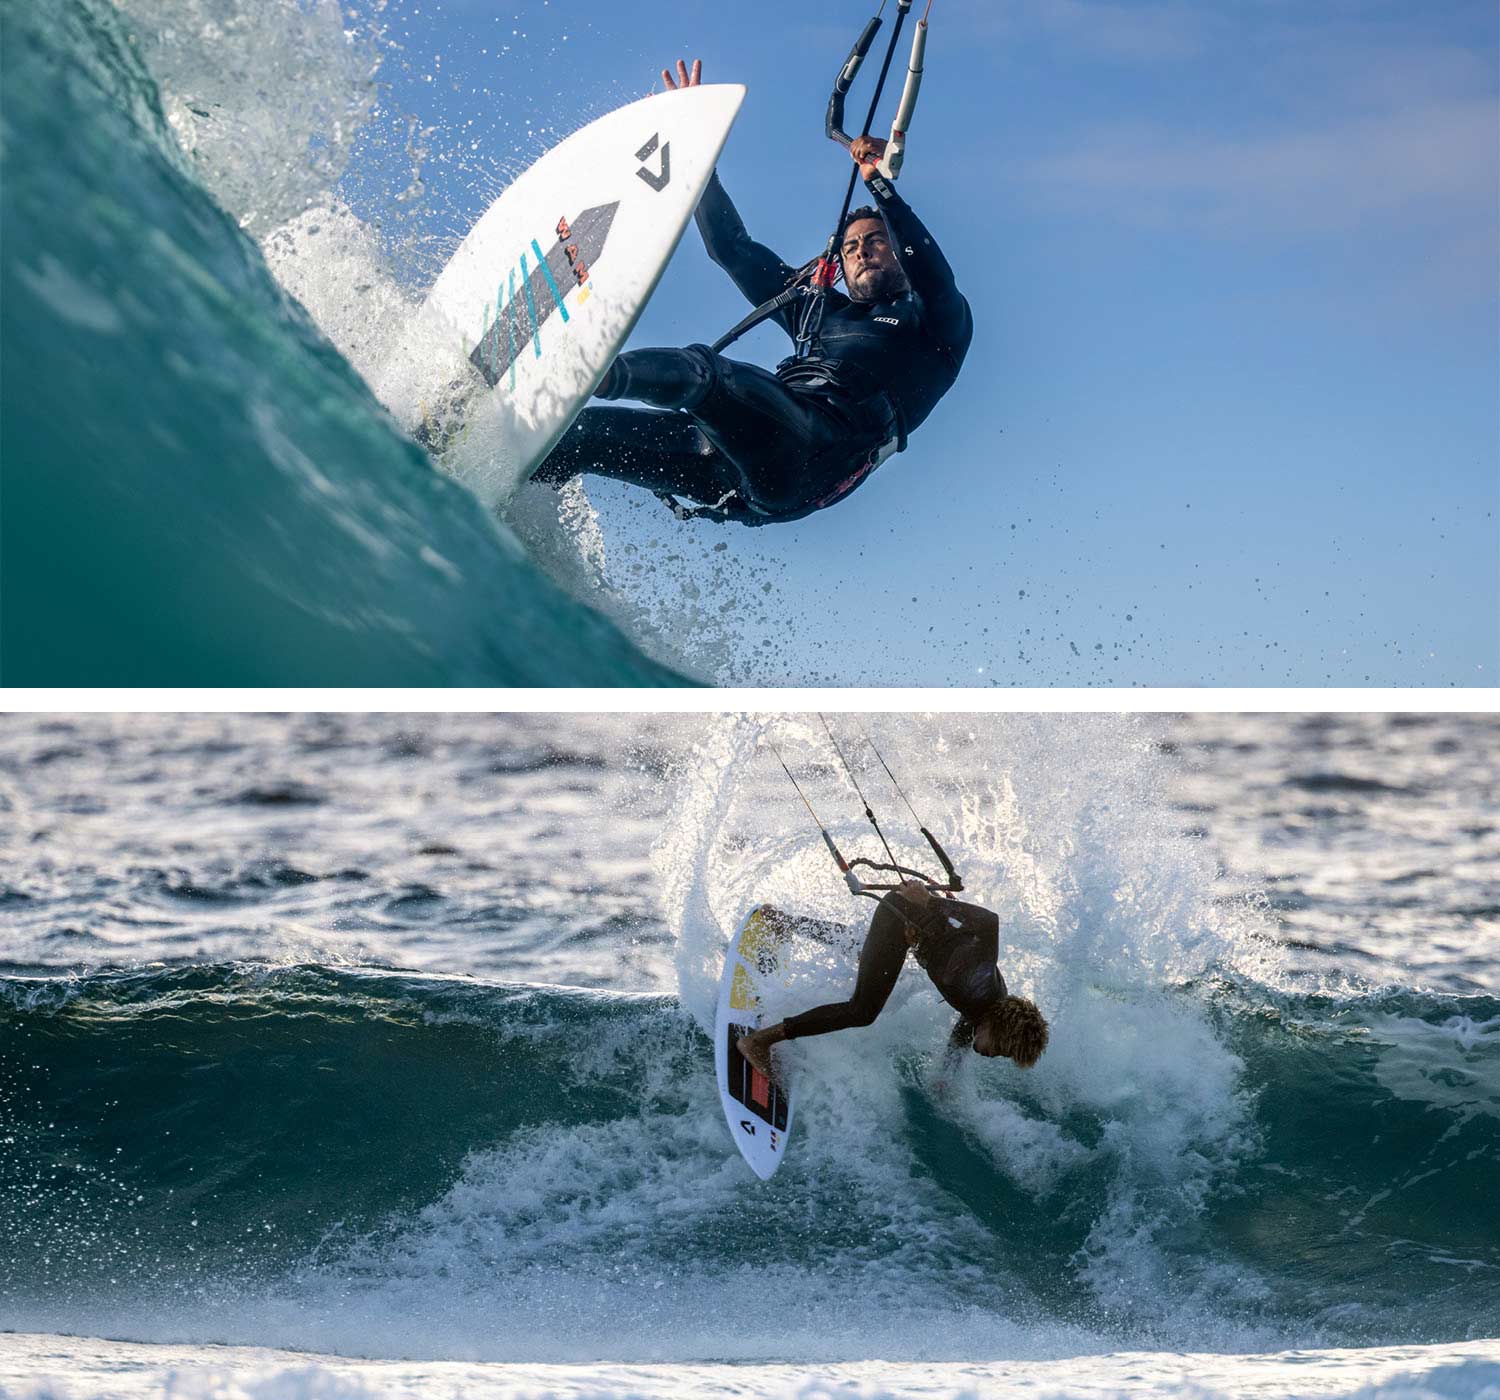 advanced kitesurfers surfing waves like pros